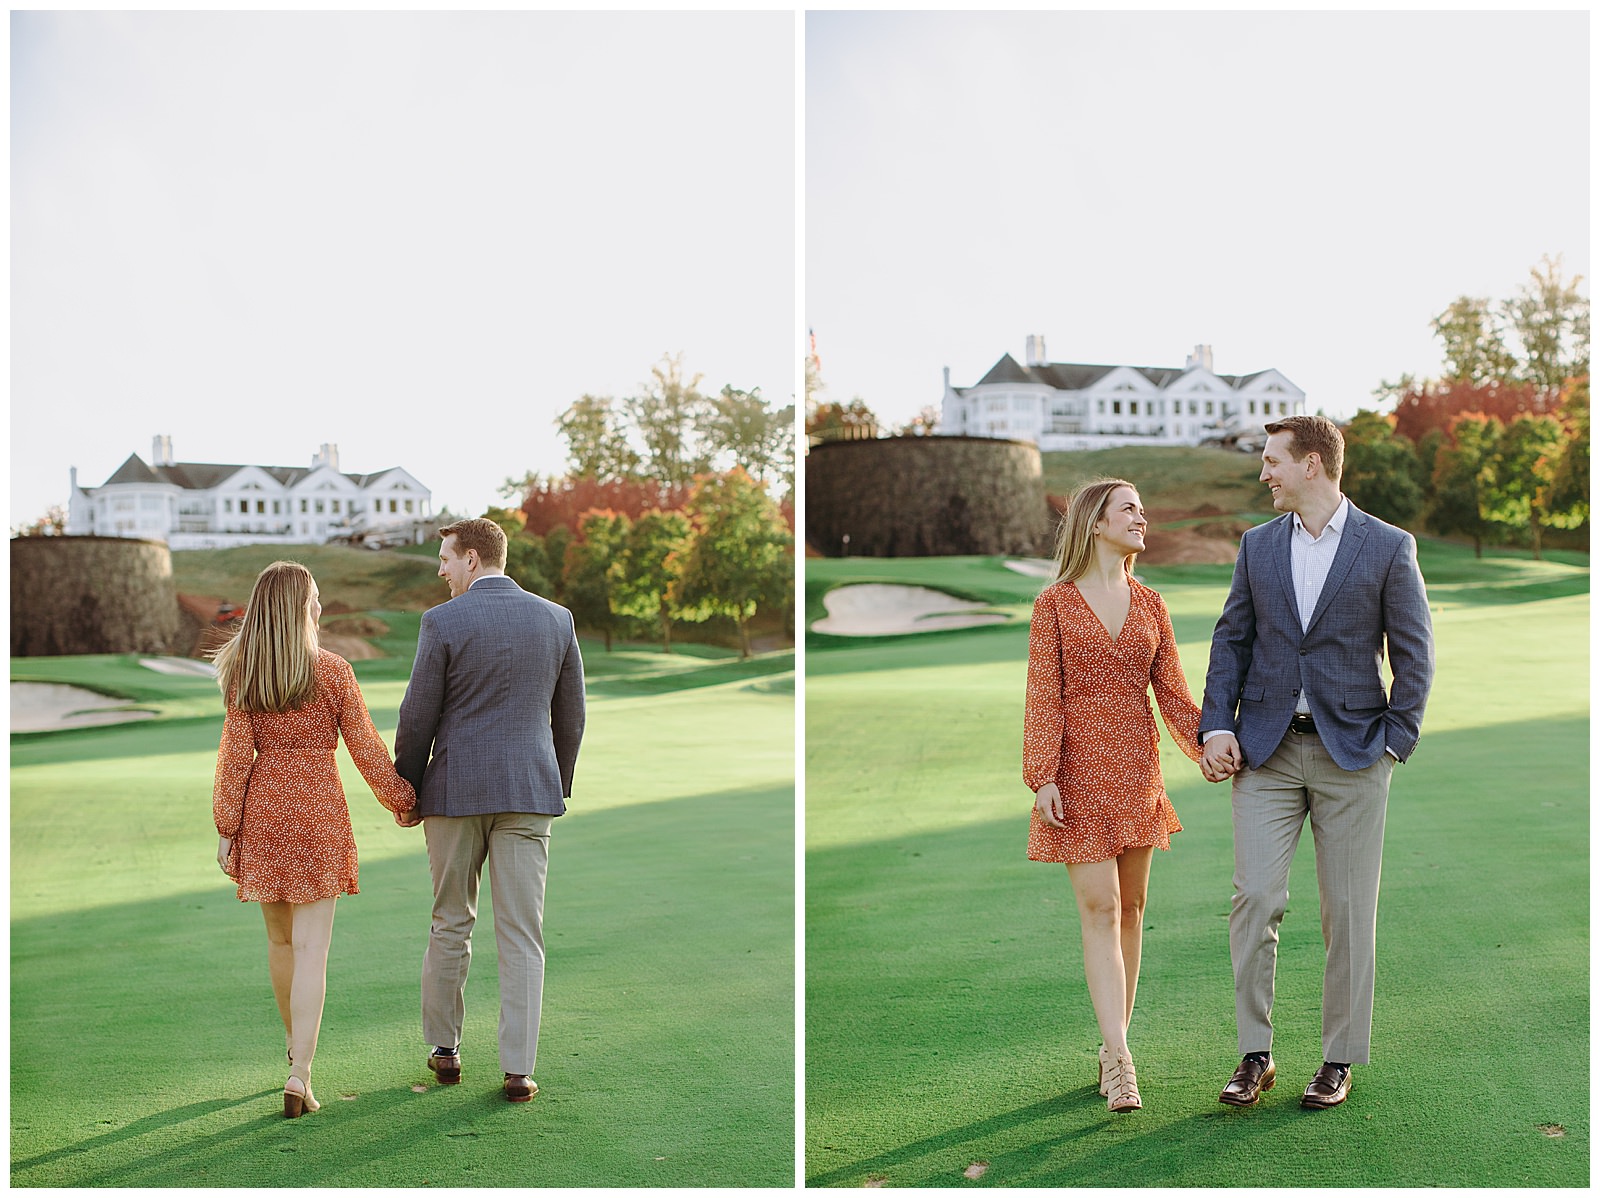 Trump National Golf Club Washington DC couple walking on golf course holding hands